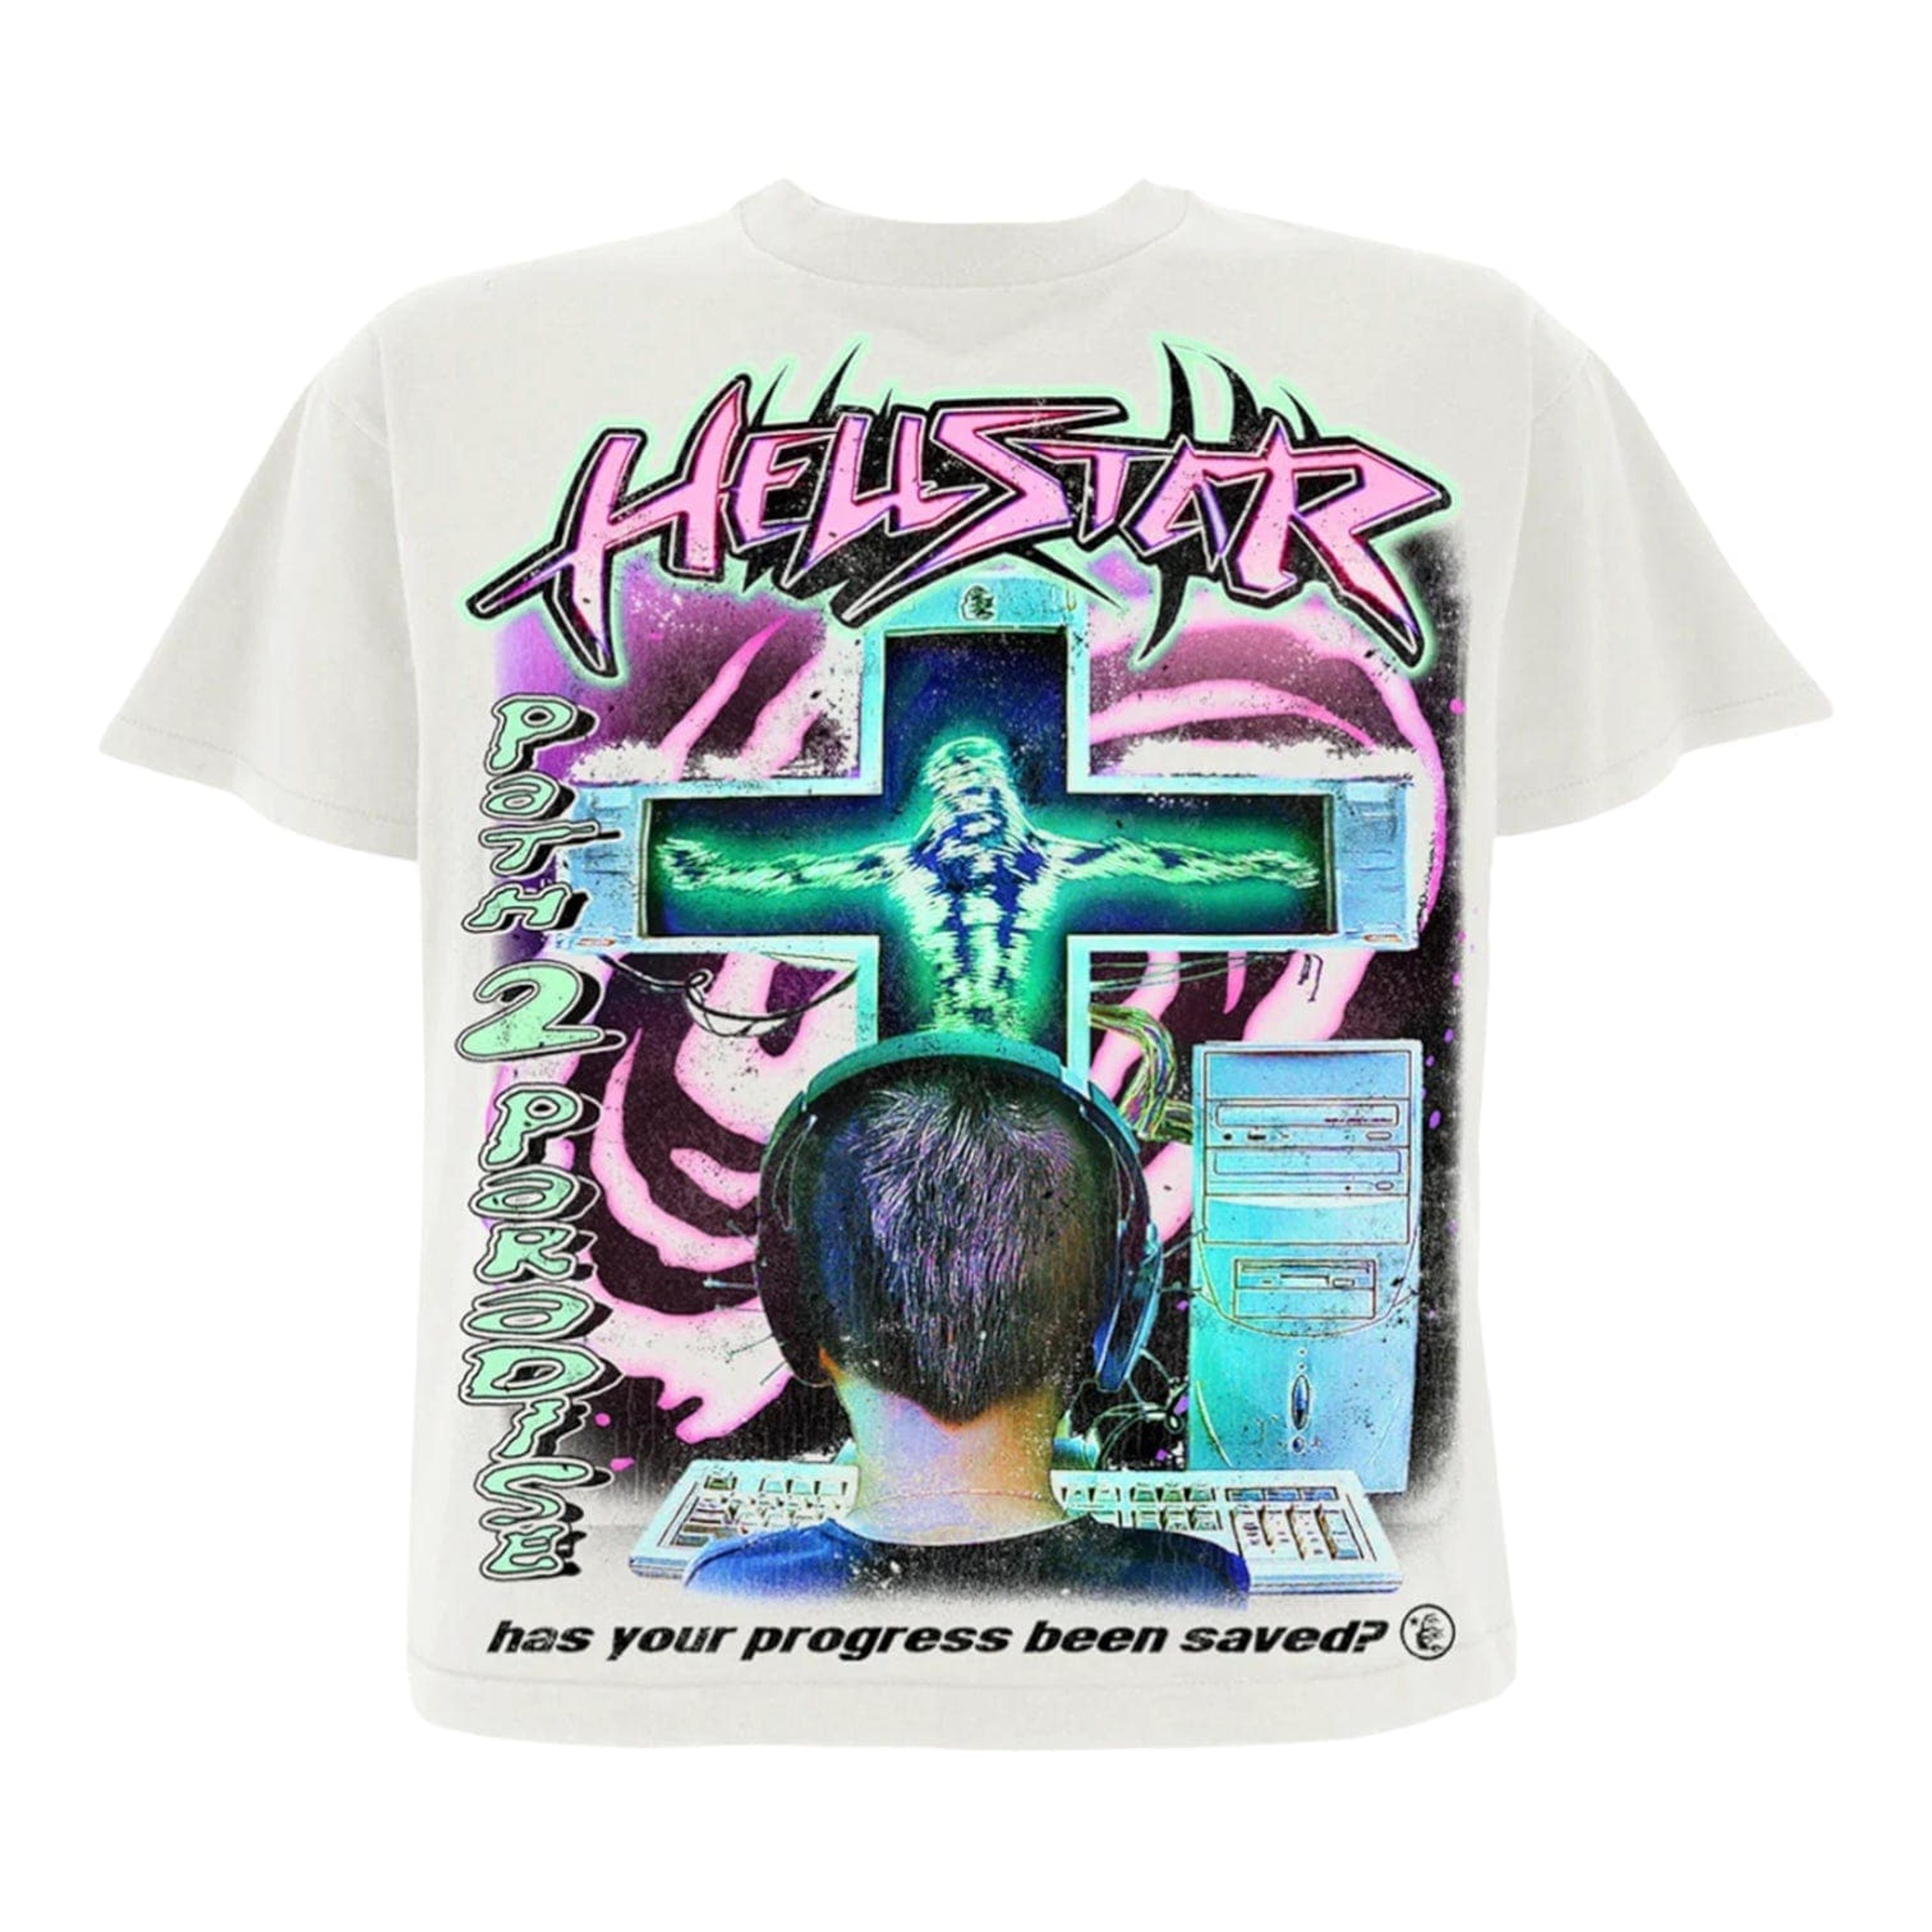 Hellstar Studios Online Short Sleeve Tee Shirt Off White